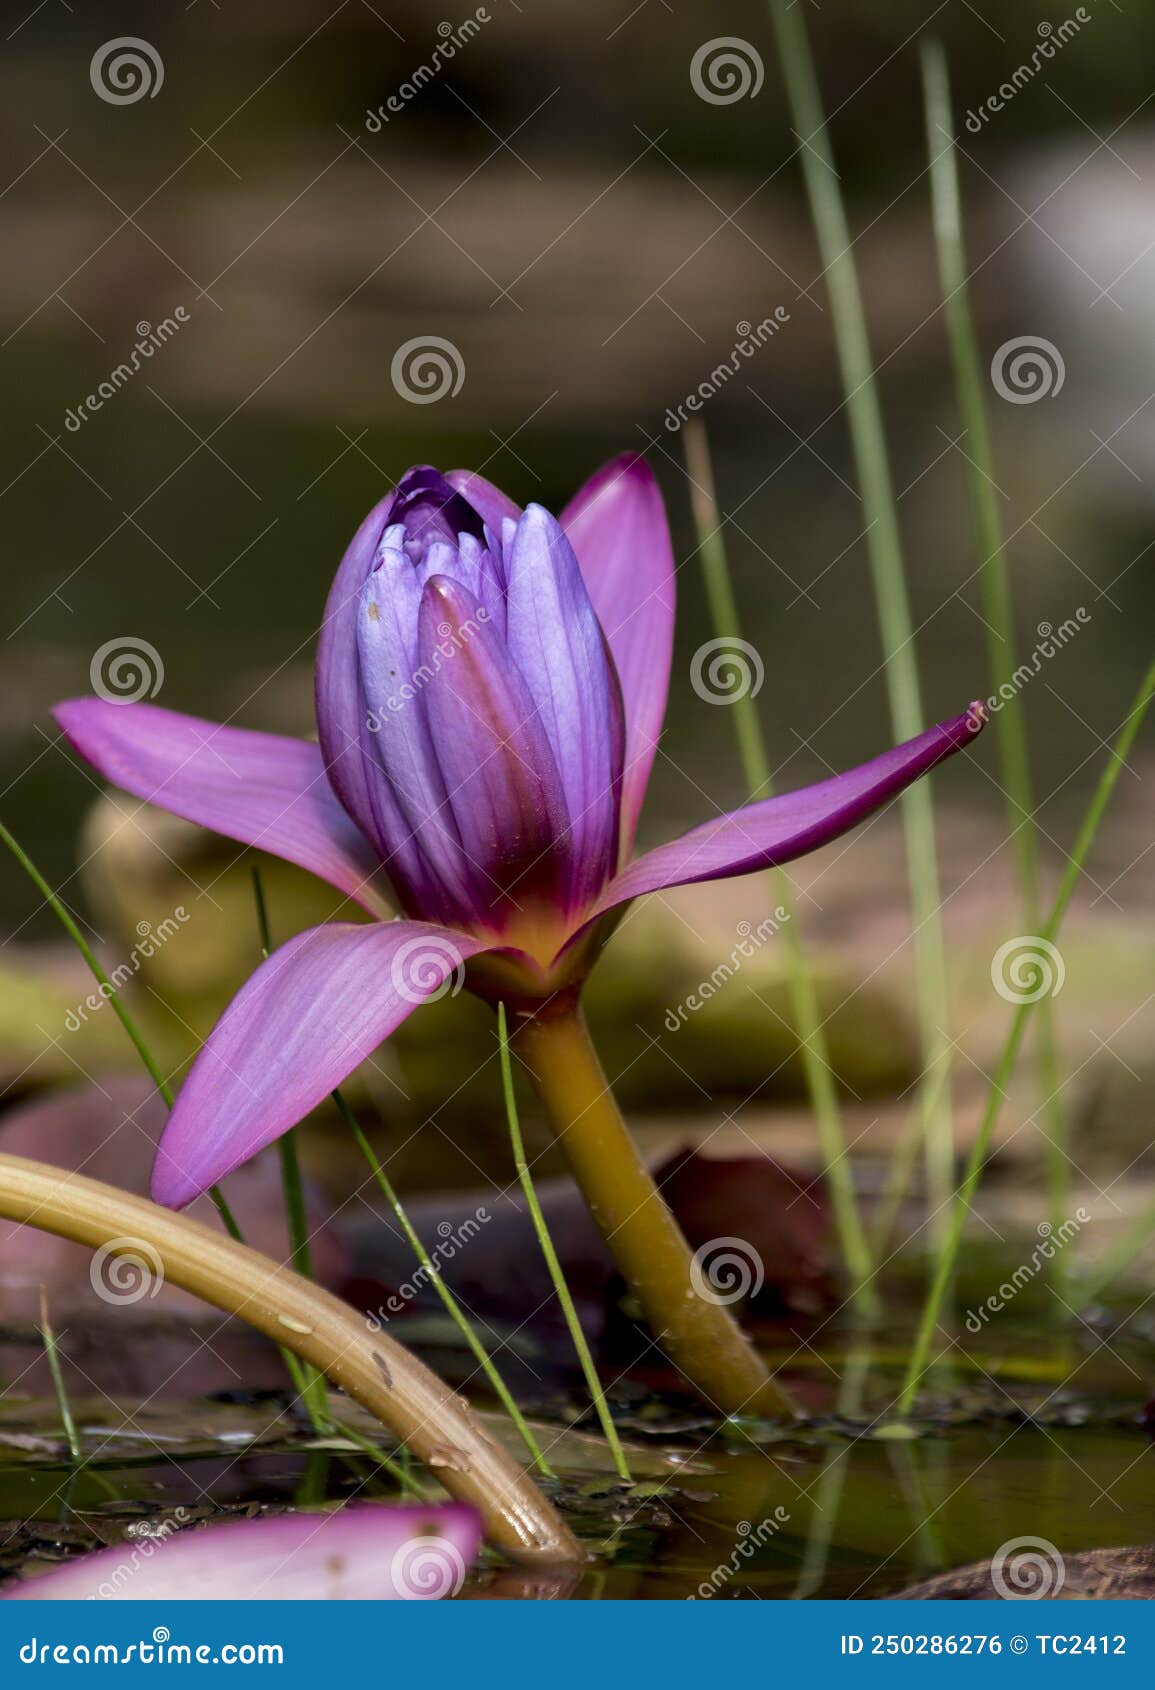 lotus flower in a lake. nenufar